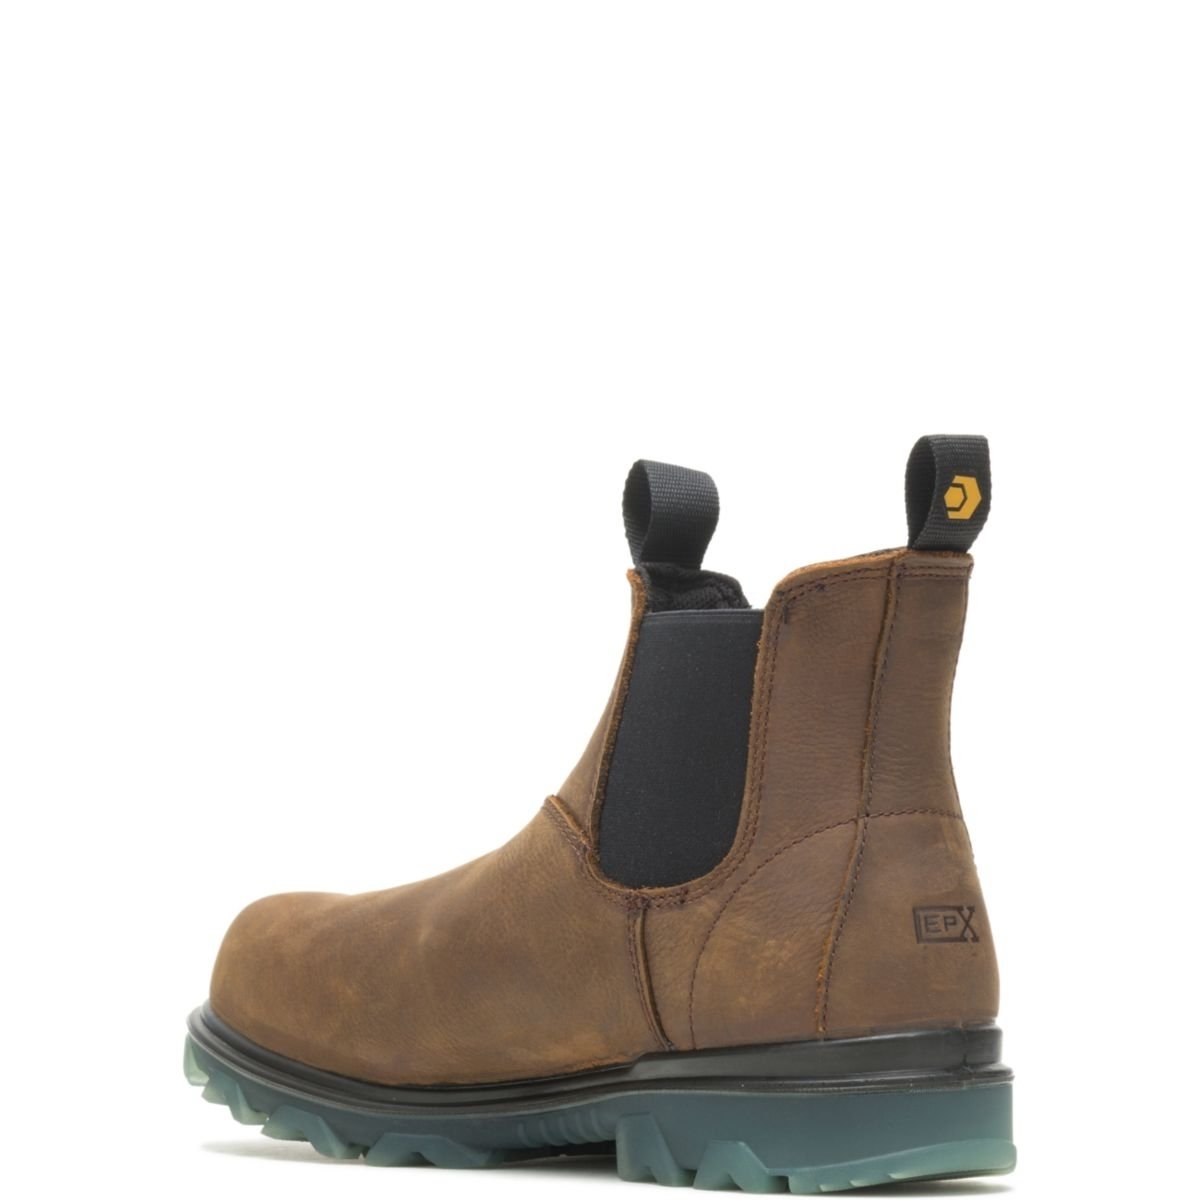 WOLVERINE Men's I-90 EPXÂ® Waterproof Soft Toe Romeo Pull On Work Boot Brown - W10790 - SUDAN BROWN, 10.5